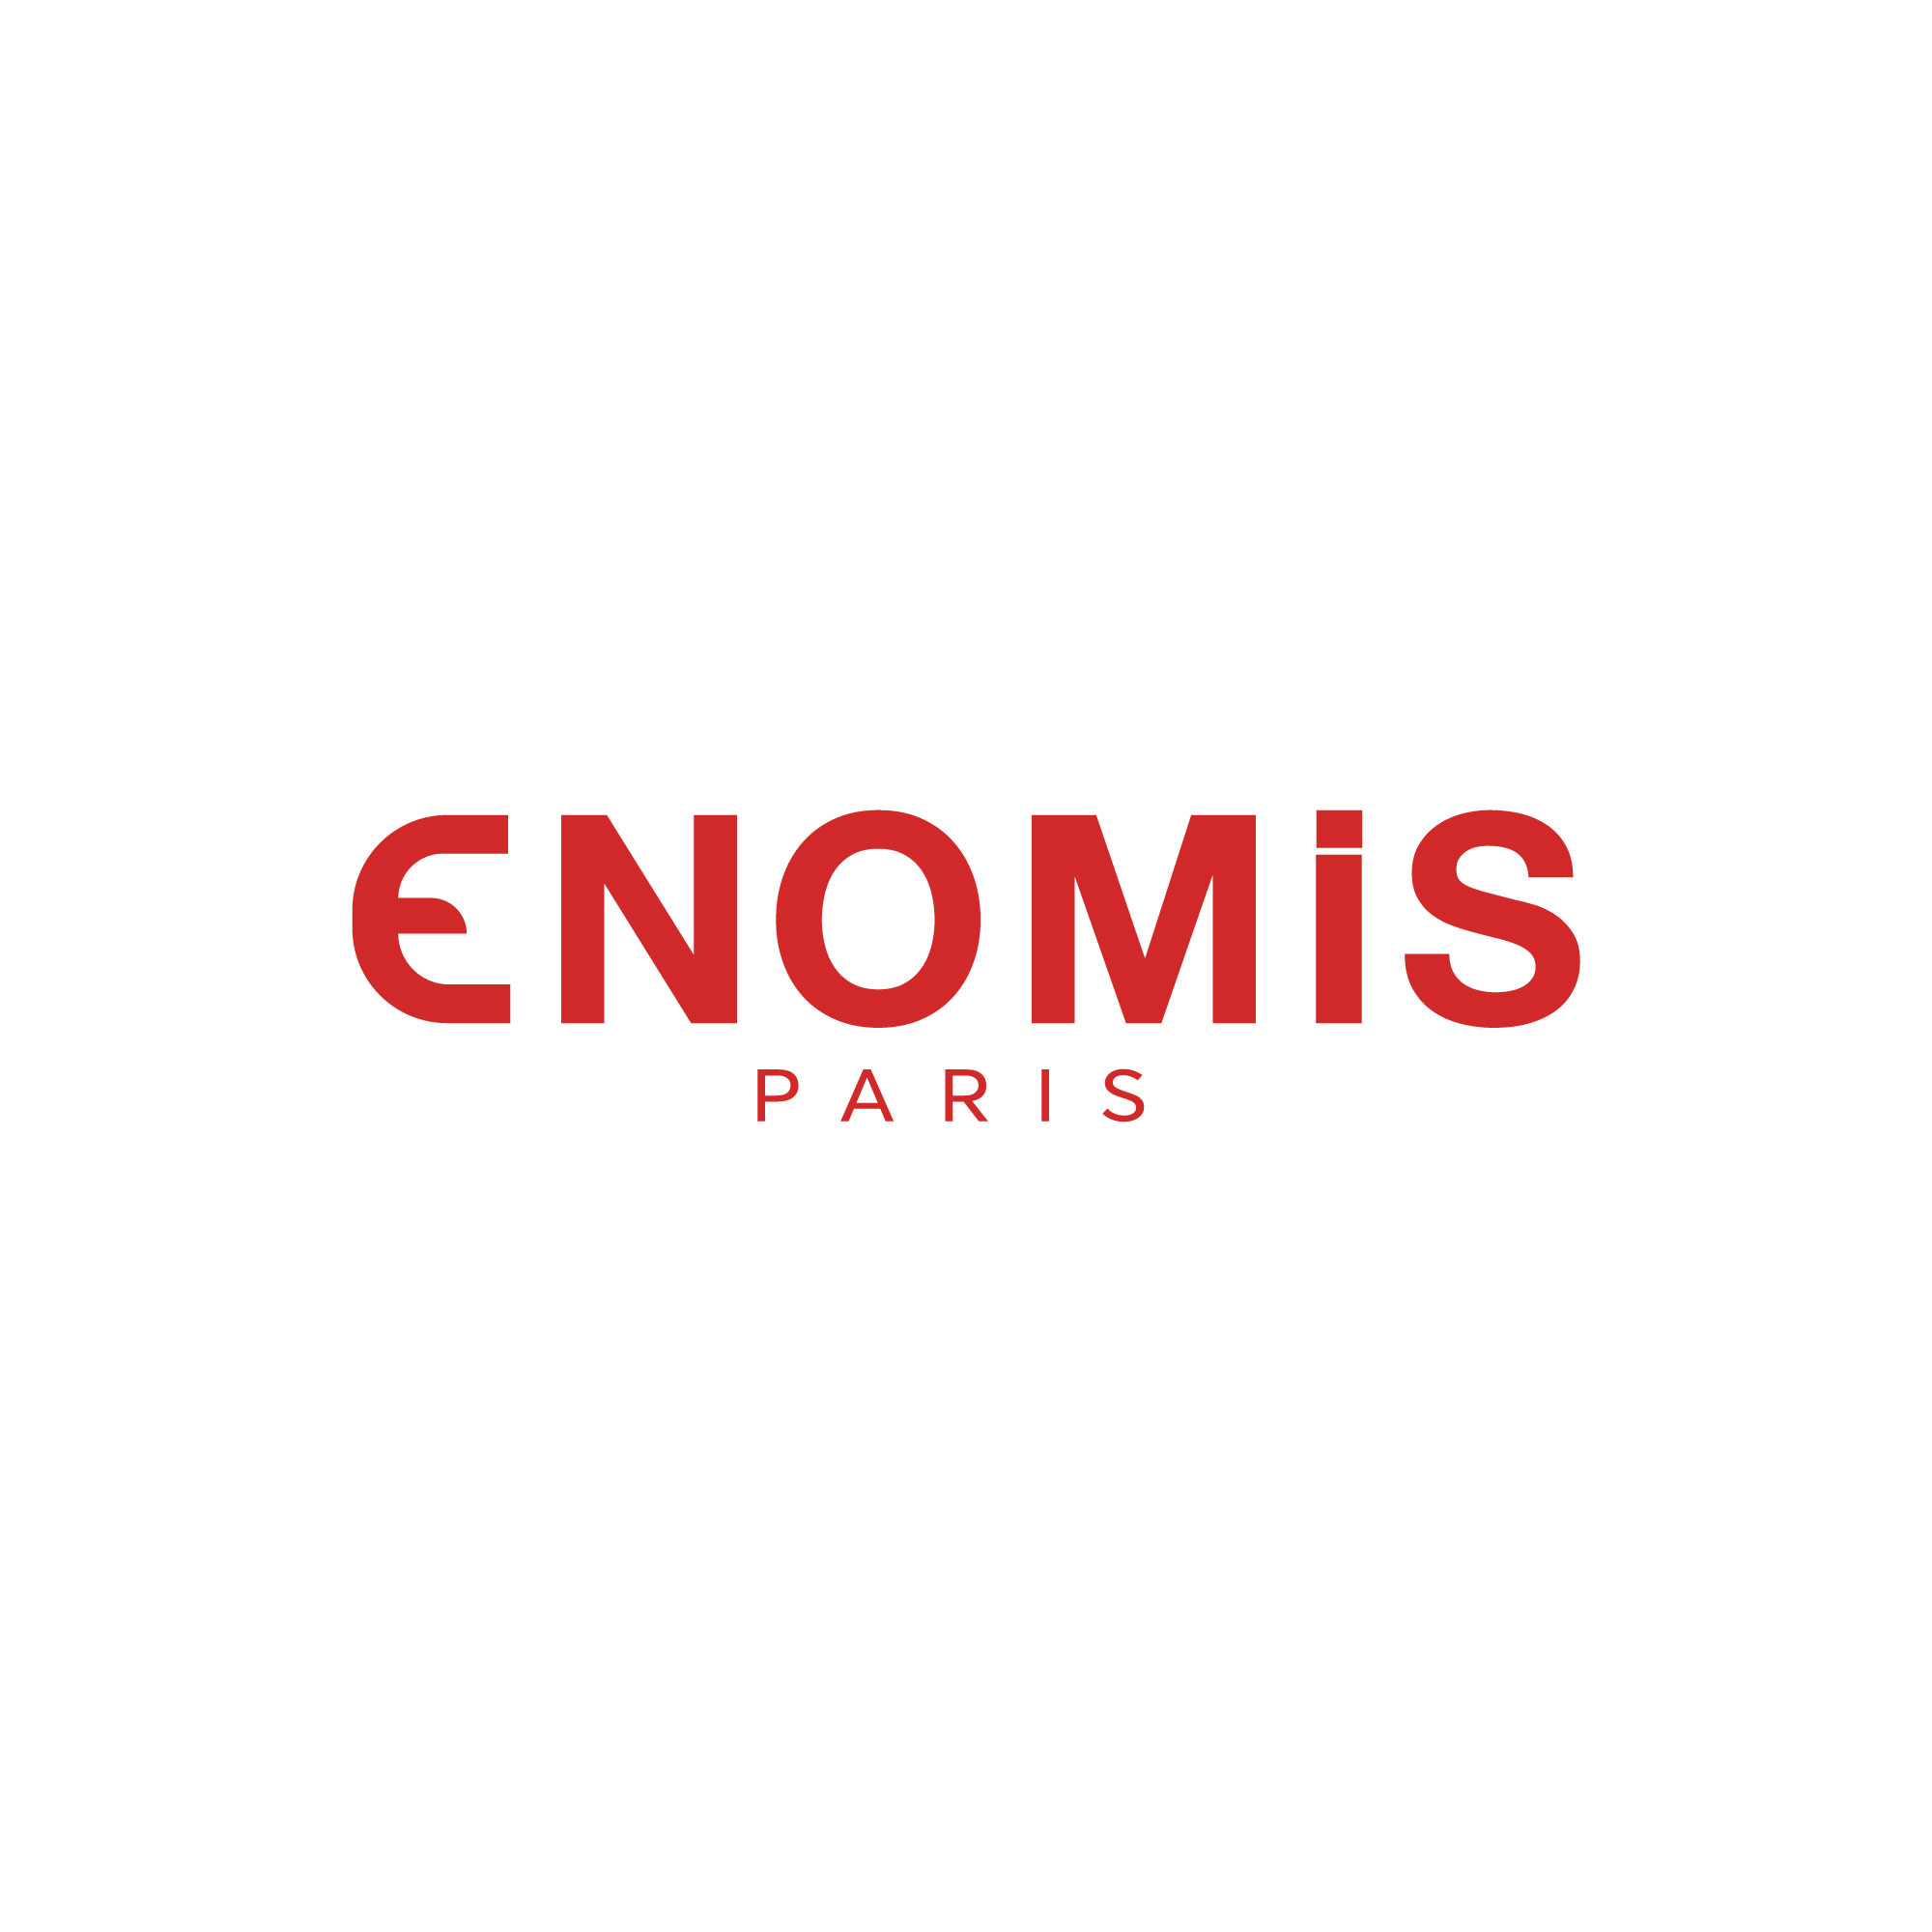 Enomis-logo-2.jpg